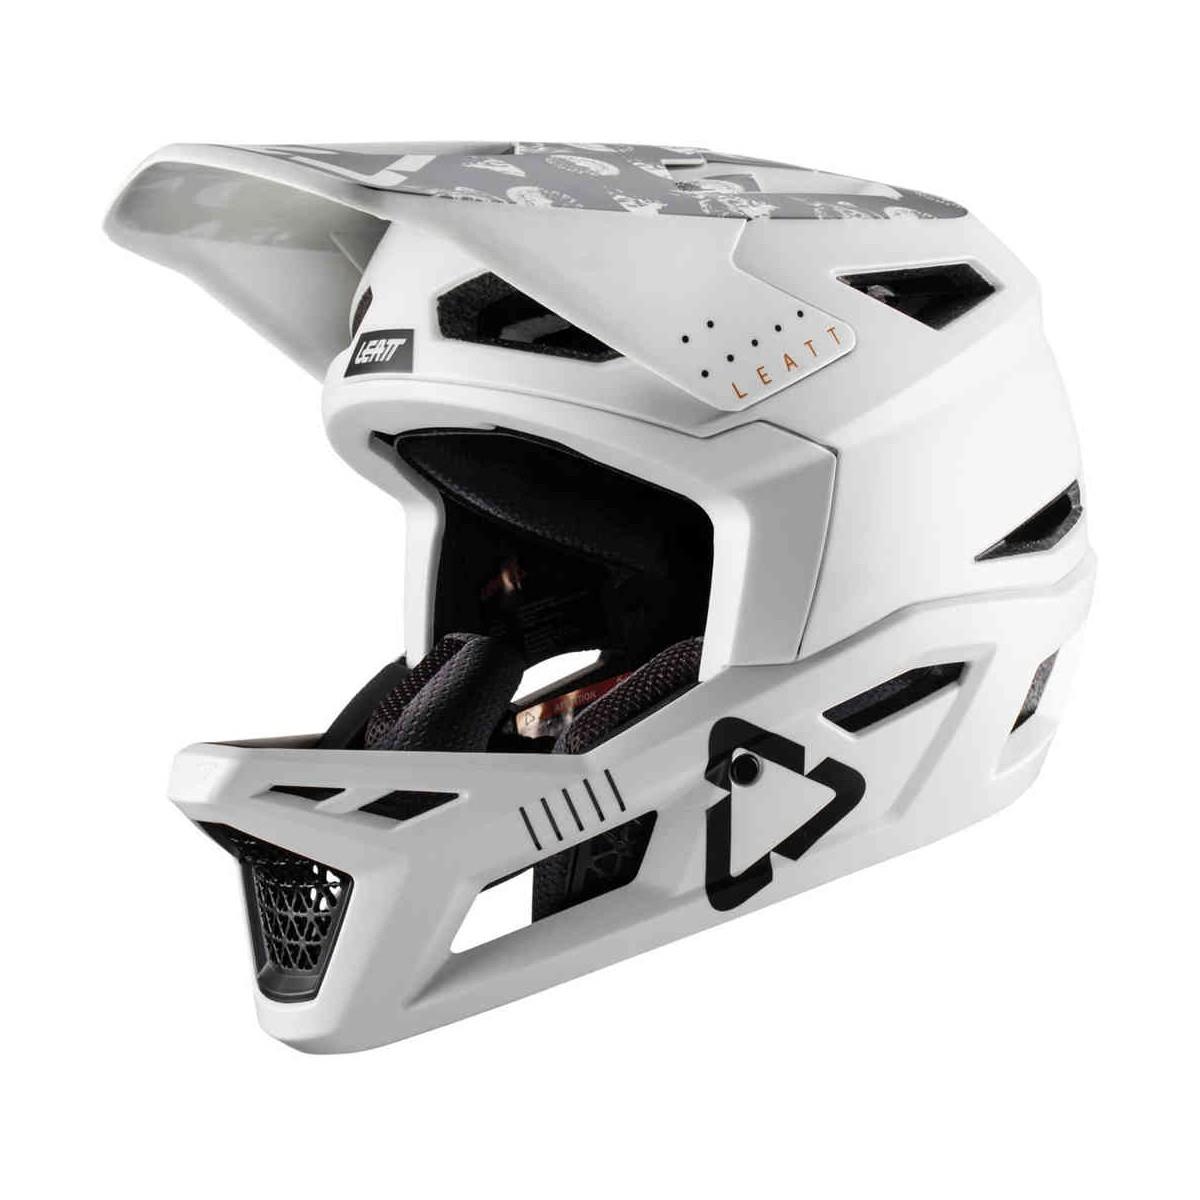 Gravity 4.0 Full Face MTB-Helm Weiß Größe L (59-60cm)